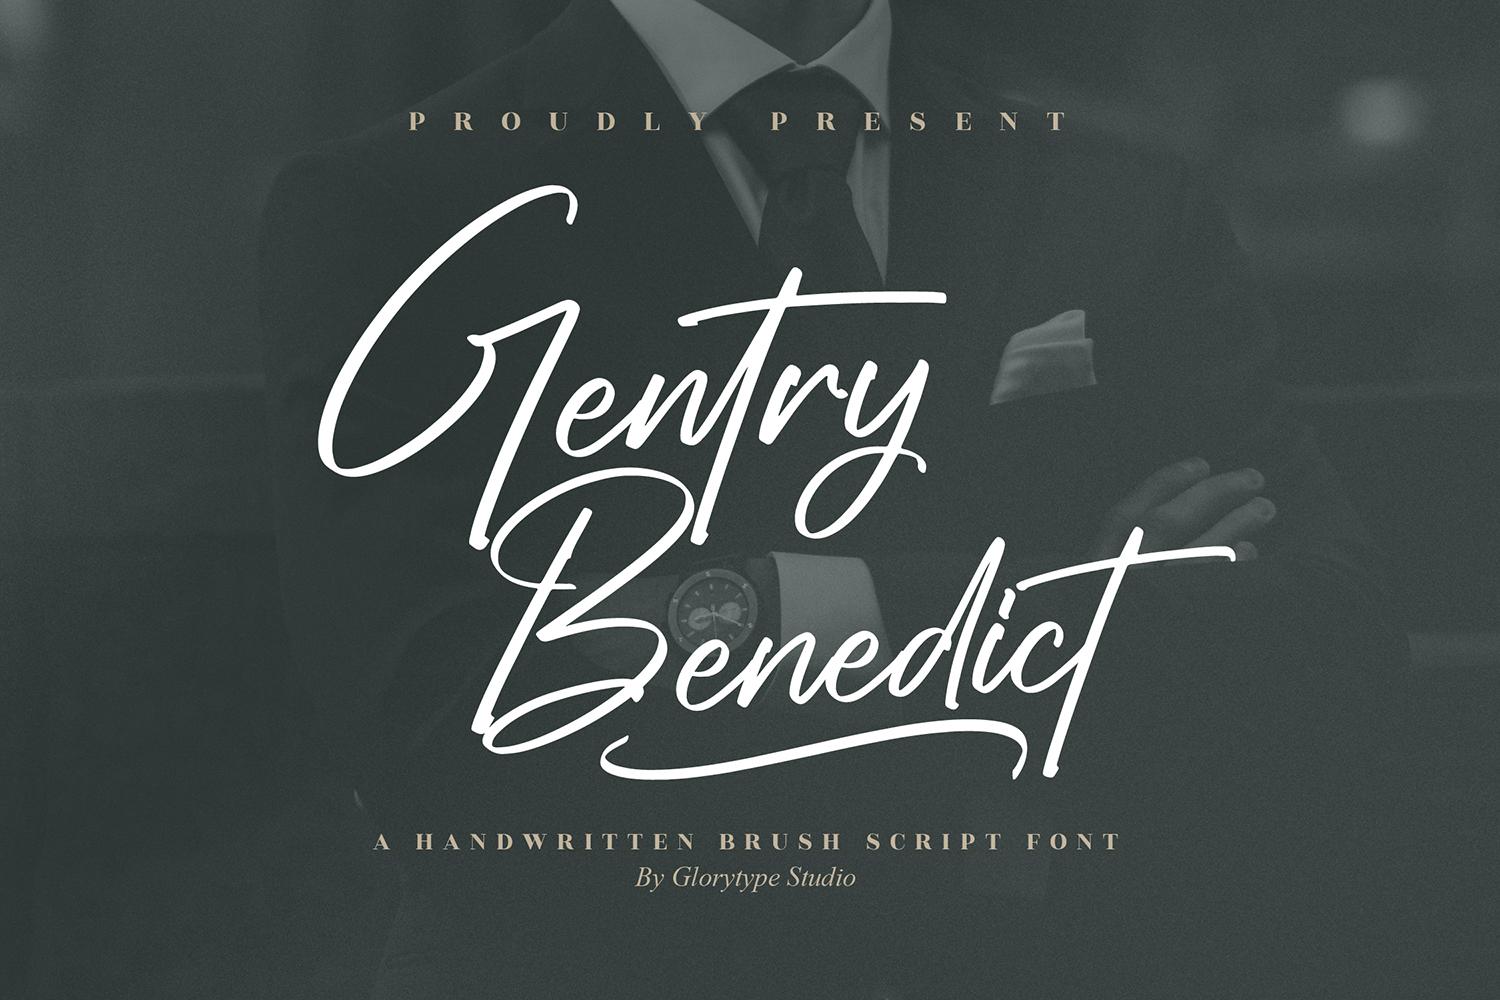 Gentry Benedict Free Font